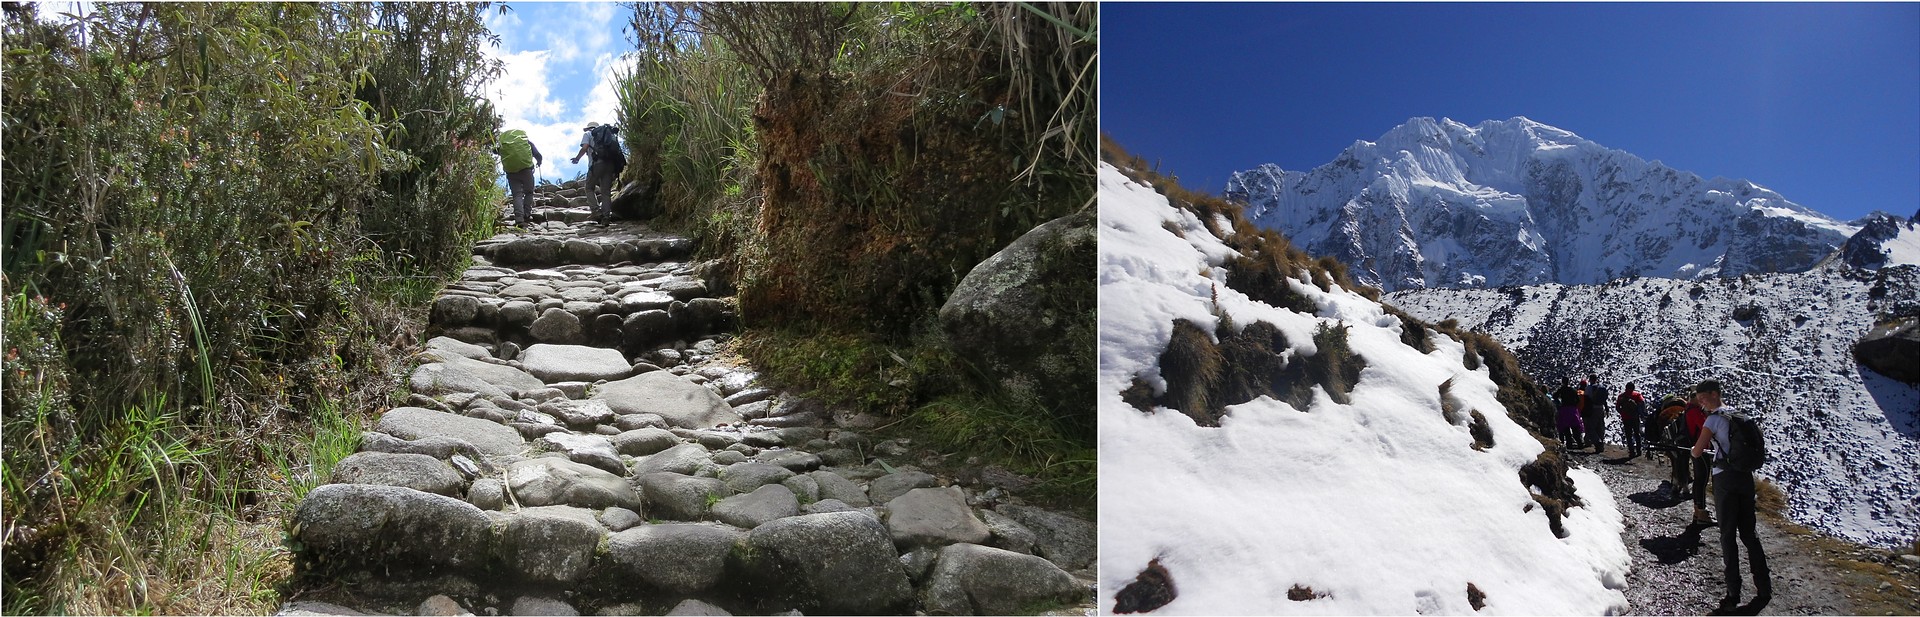 Inca Trail Vs Salkantay Trek Distance 1